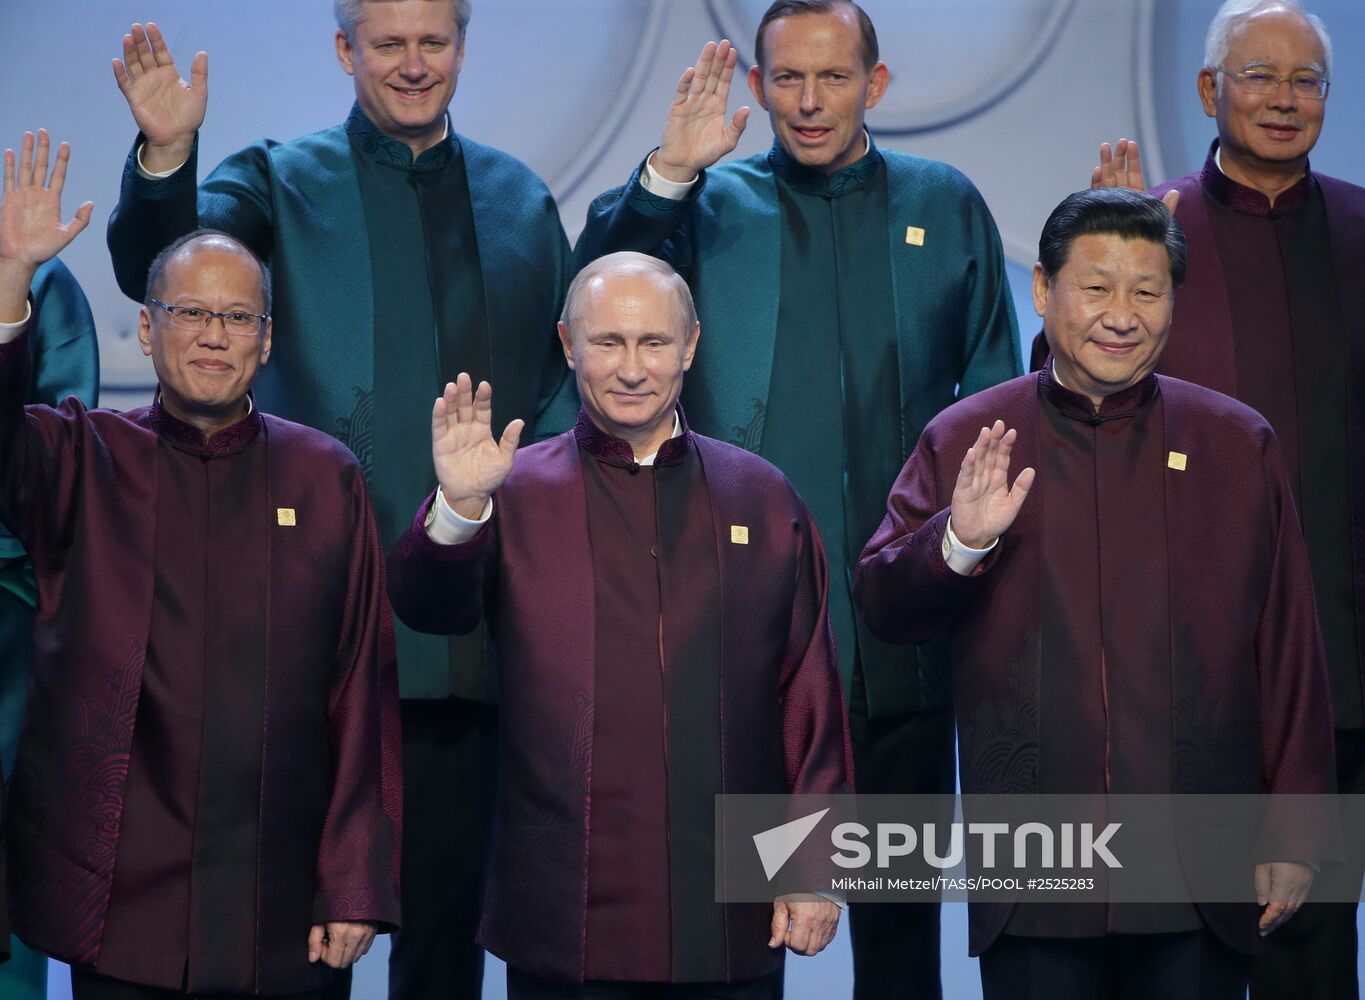 Vladimir Putin visits APEC Economic Leaders' Meeting